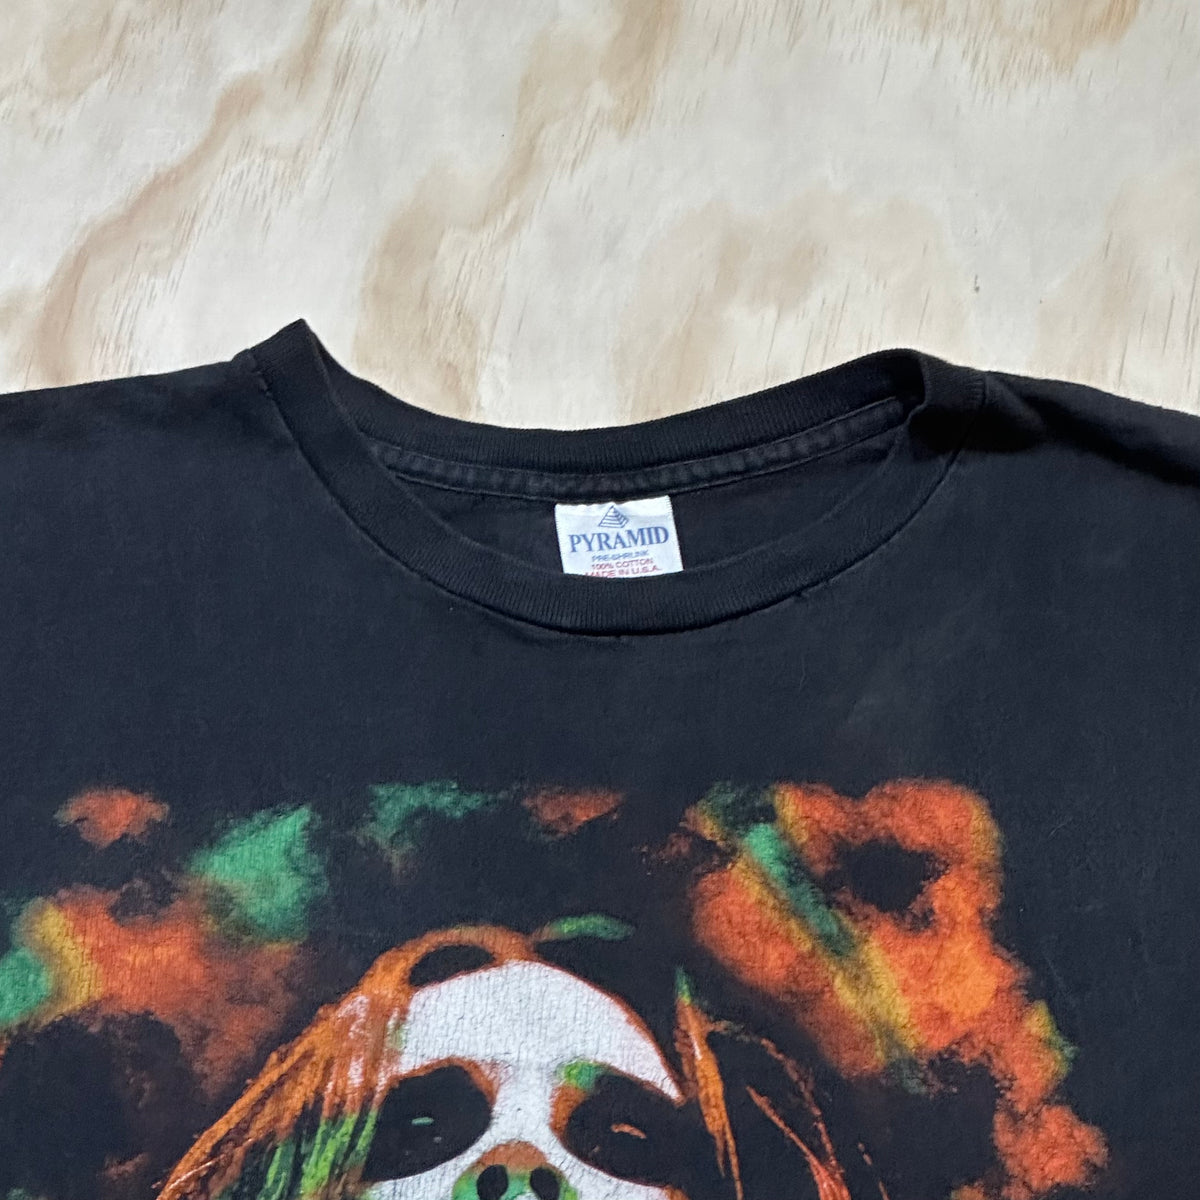 1996 Vintage The Ozz Fest Ozzy Osbourne tour shirt